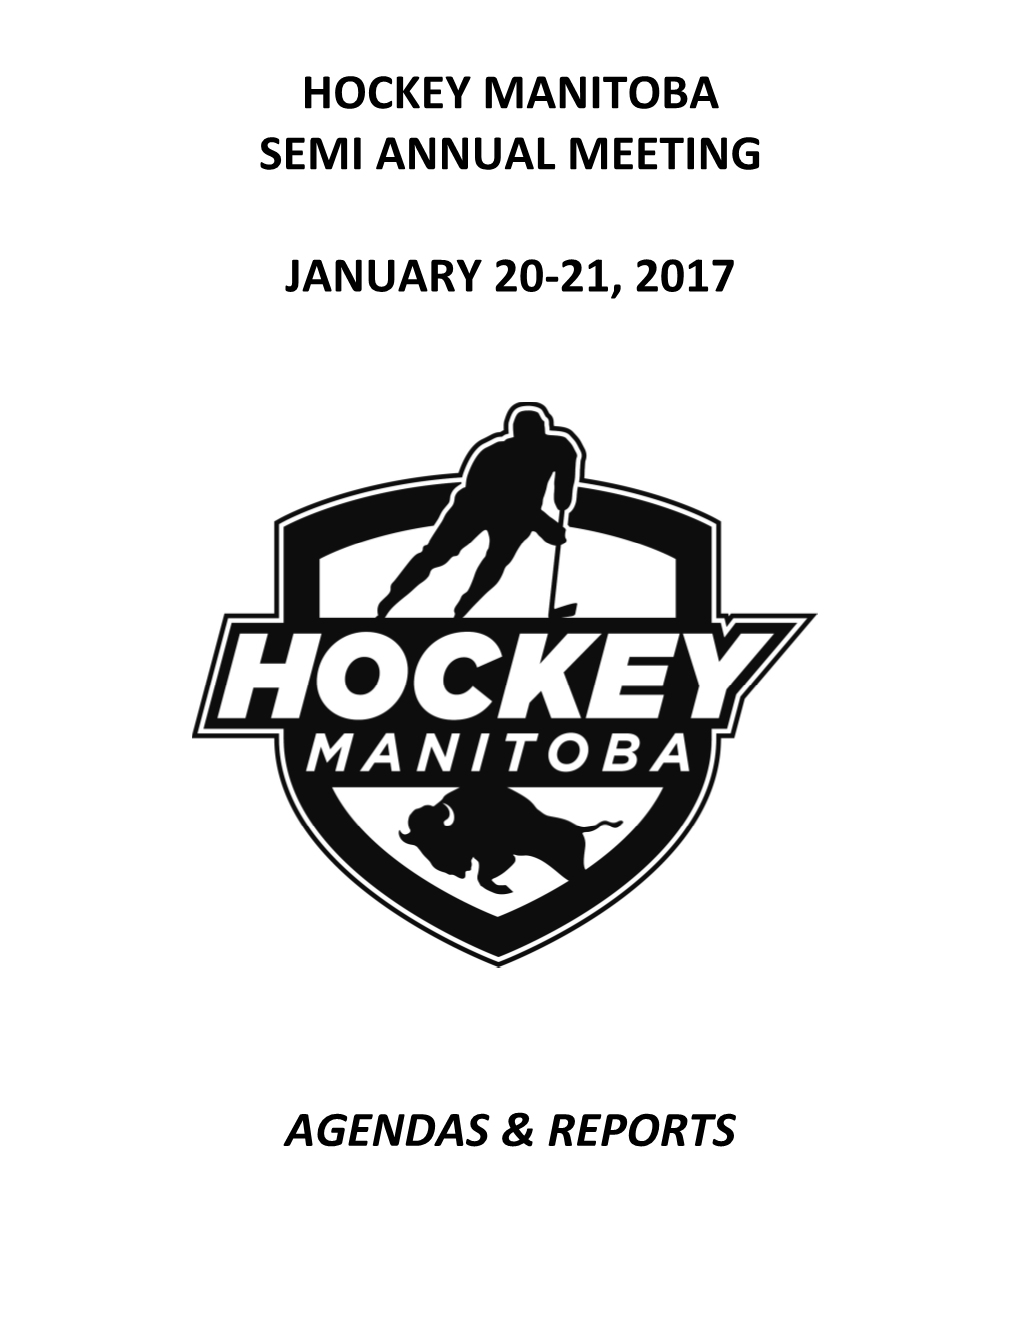 Hockey Manitoba Semi Annual Meeting January 20-21, 2017